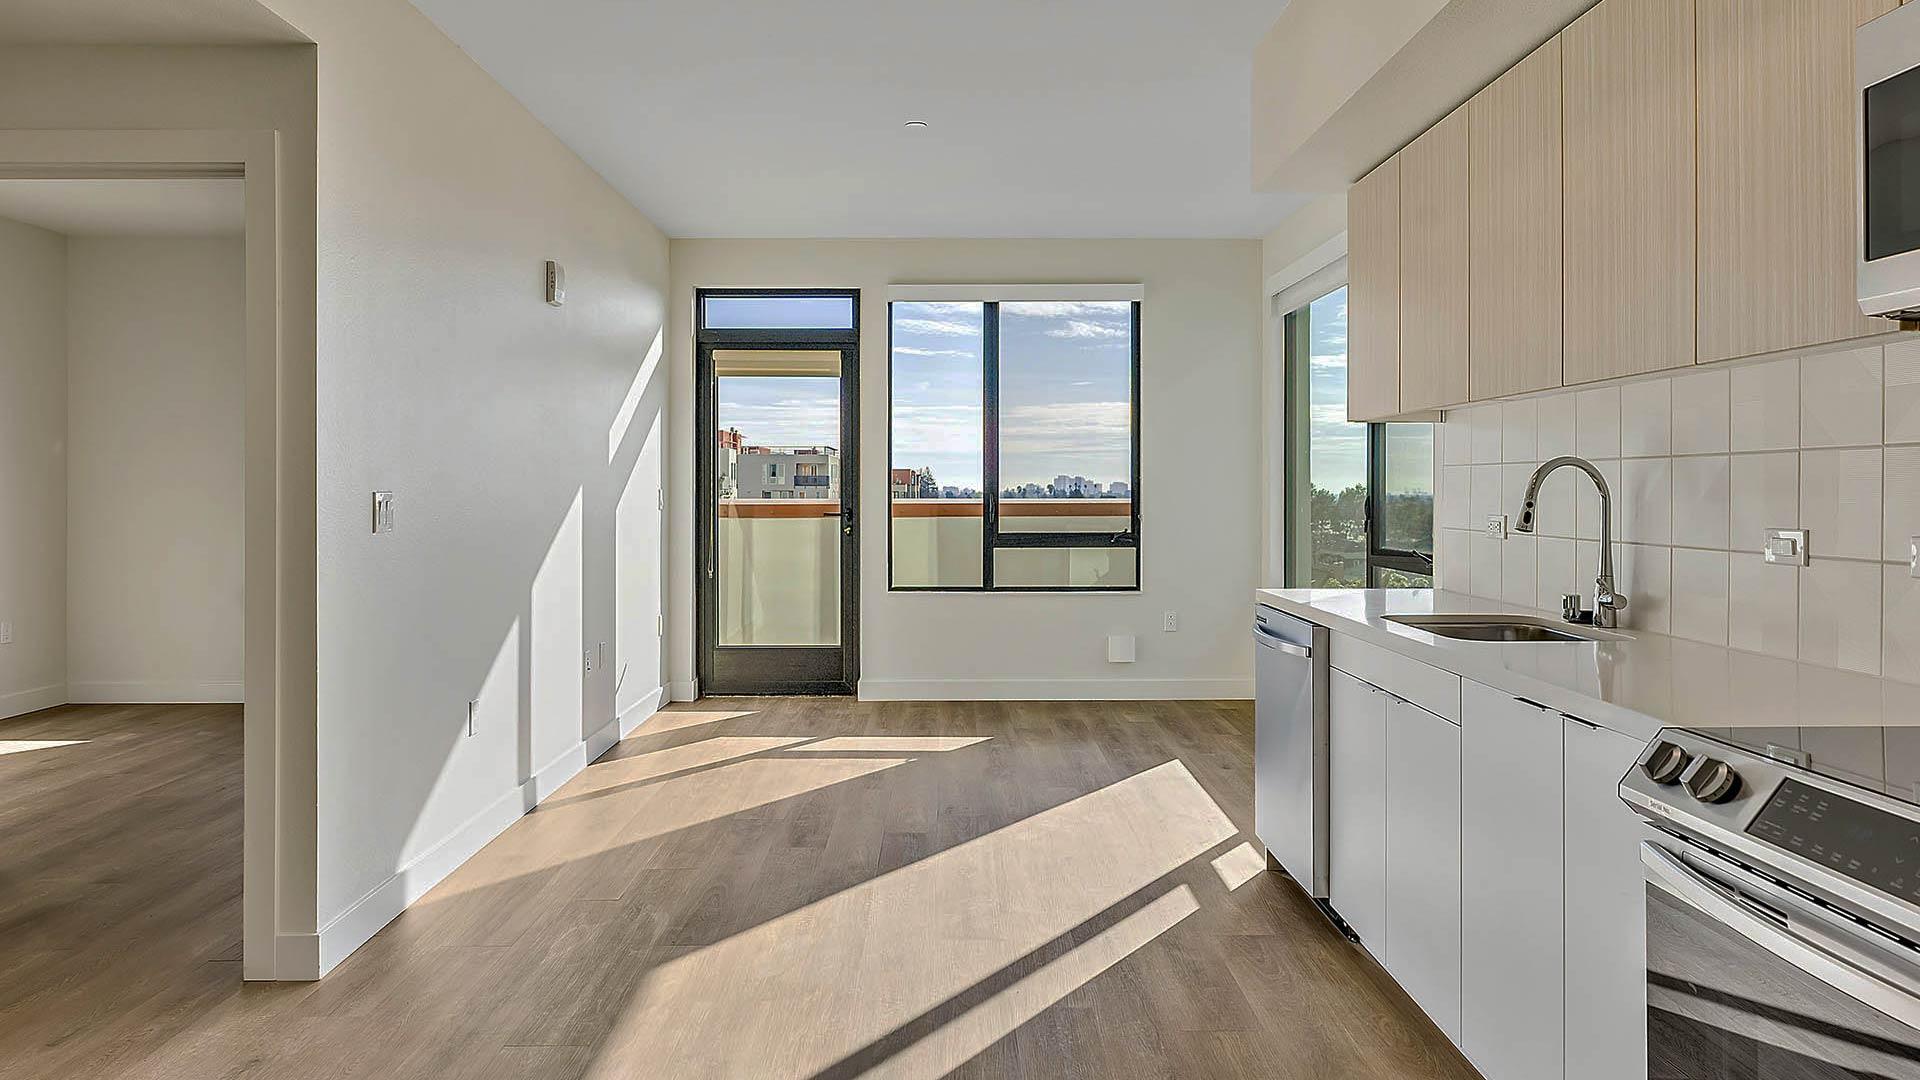 Blake apartments b7 floorplan kitchen window view 1